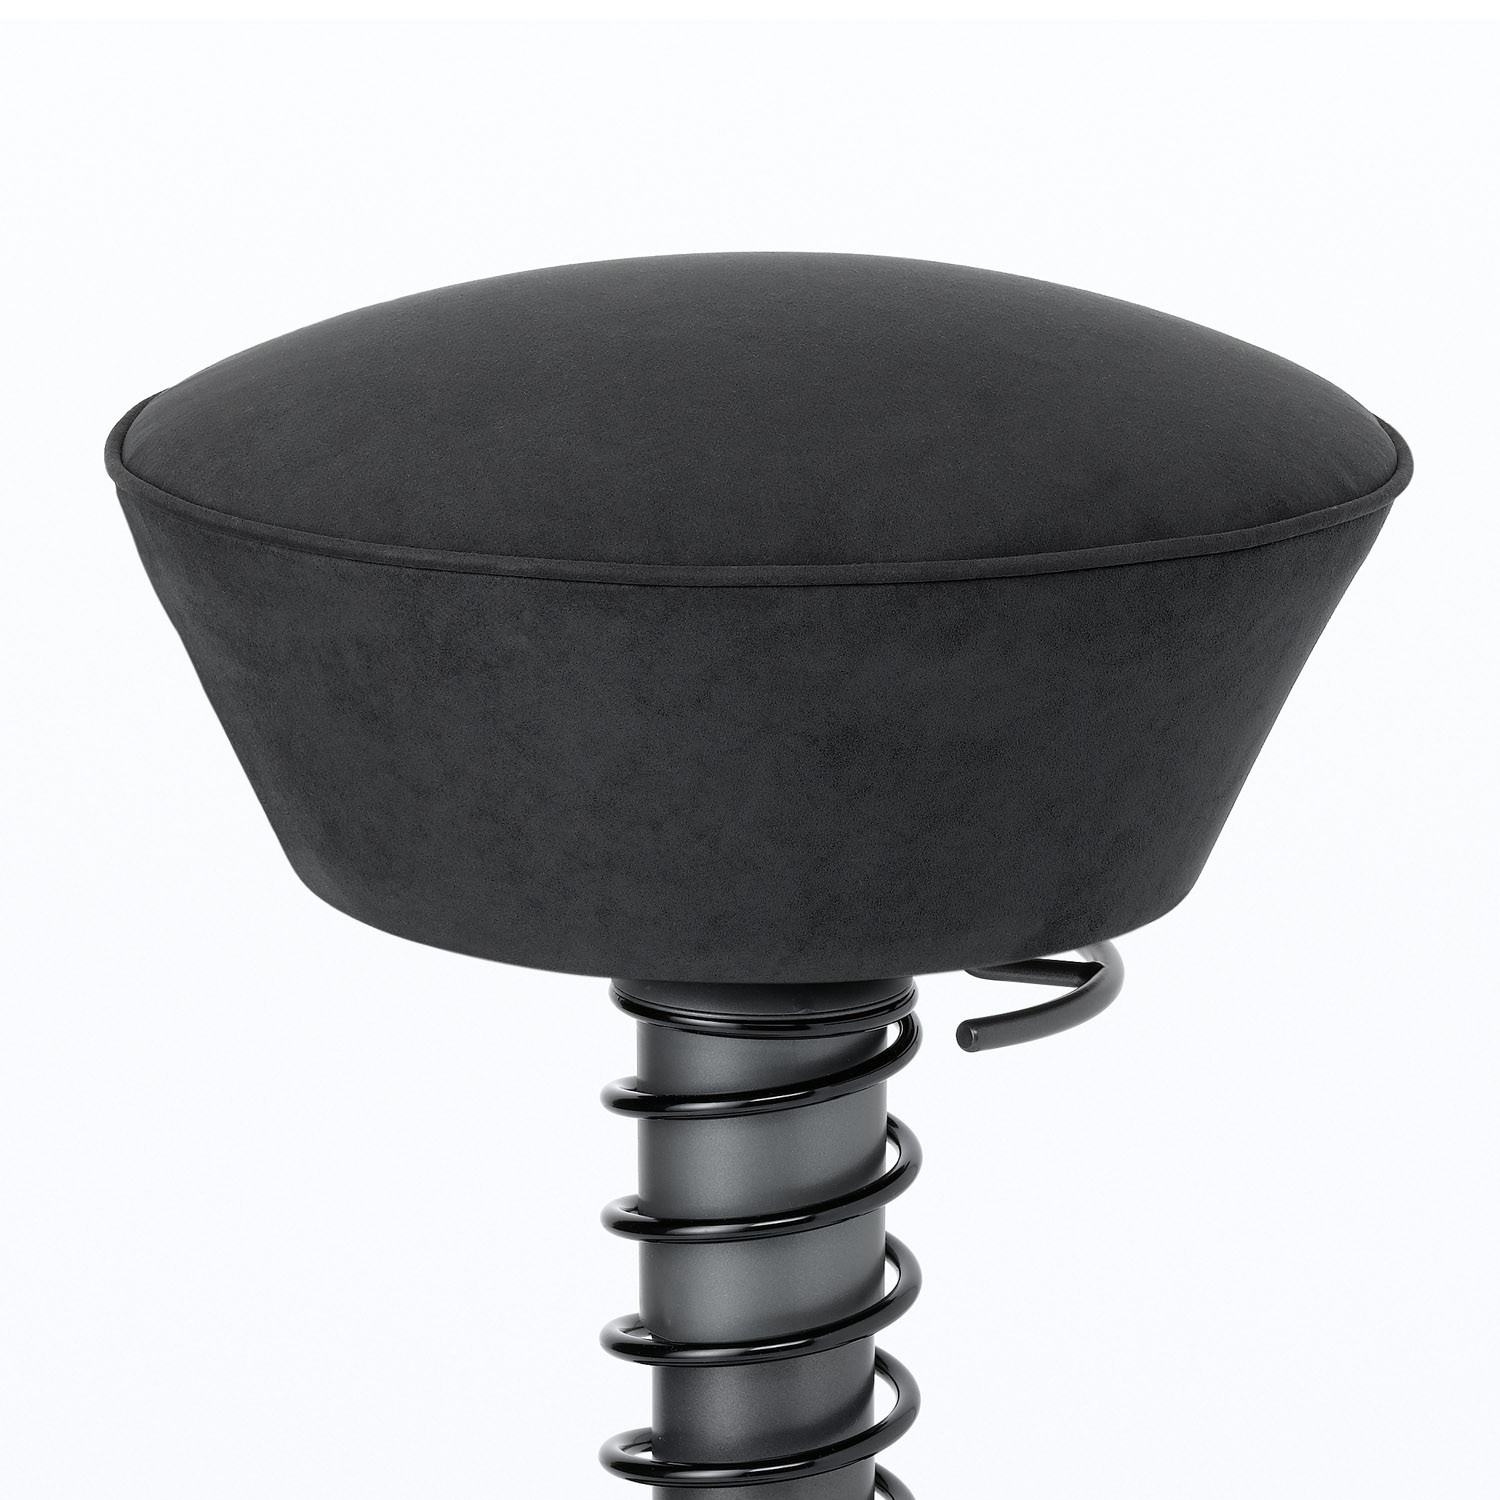 Swopper Standard Seat in black from Aeris